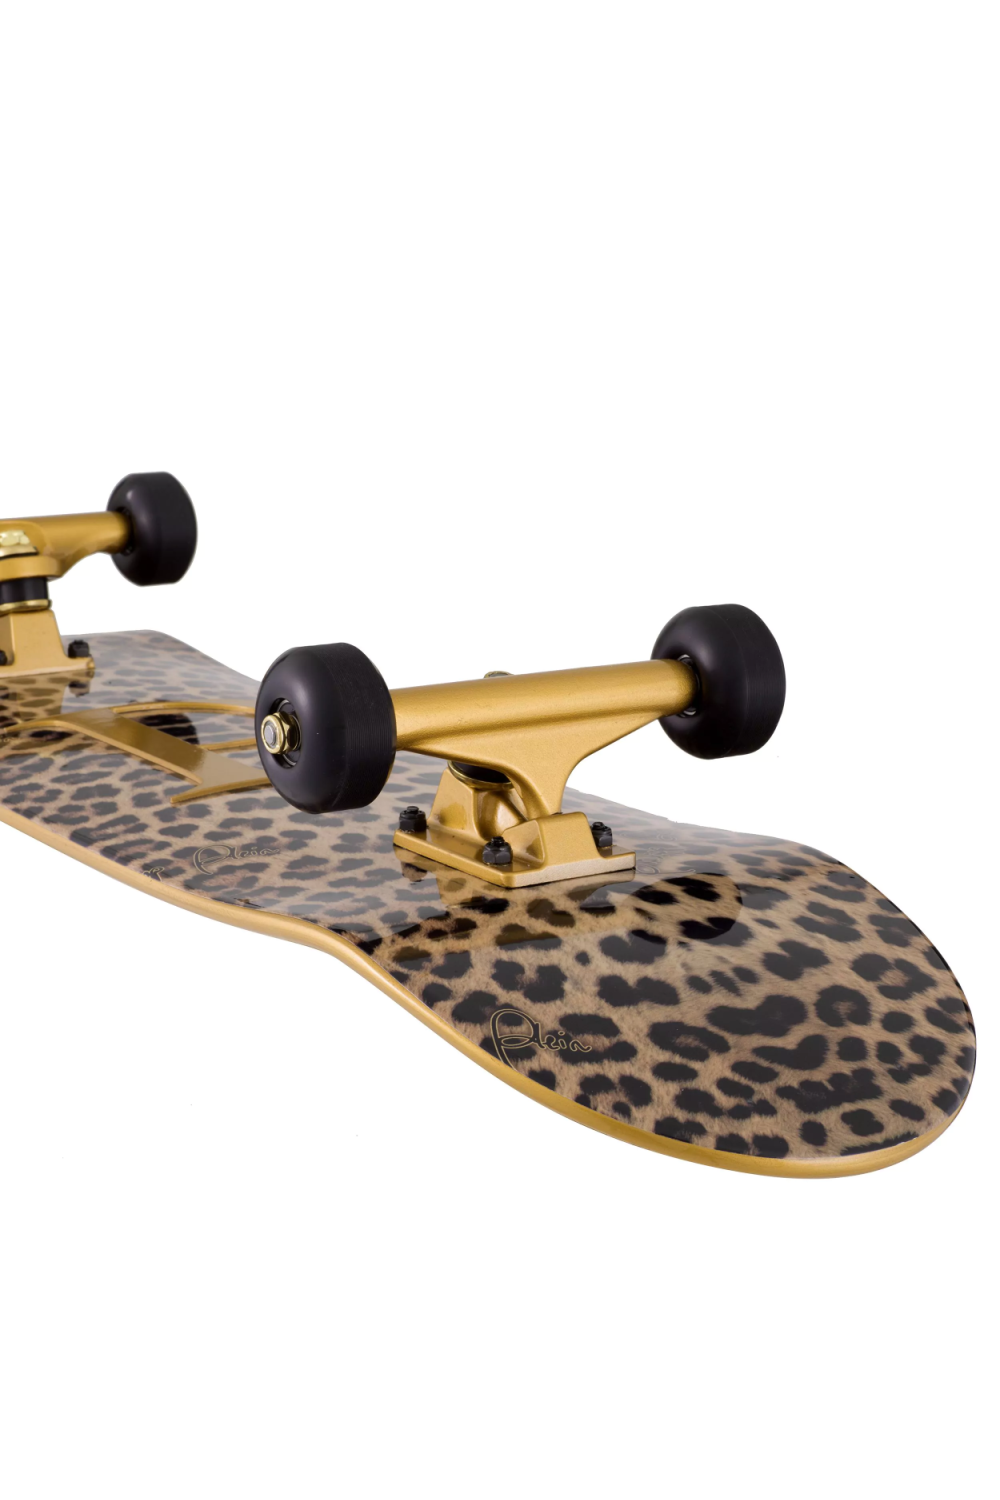 Printed Maple Wood Skateboard | Philipp Plein Leopard | Oroa.com